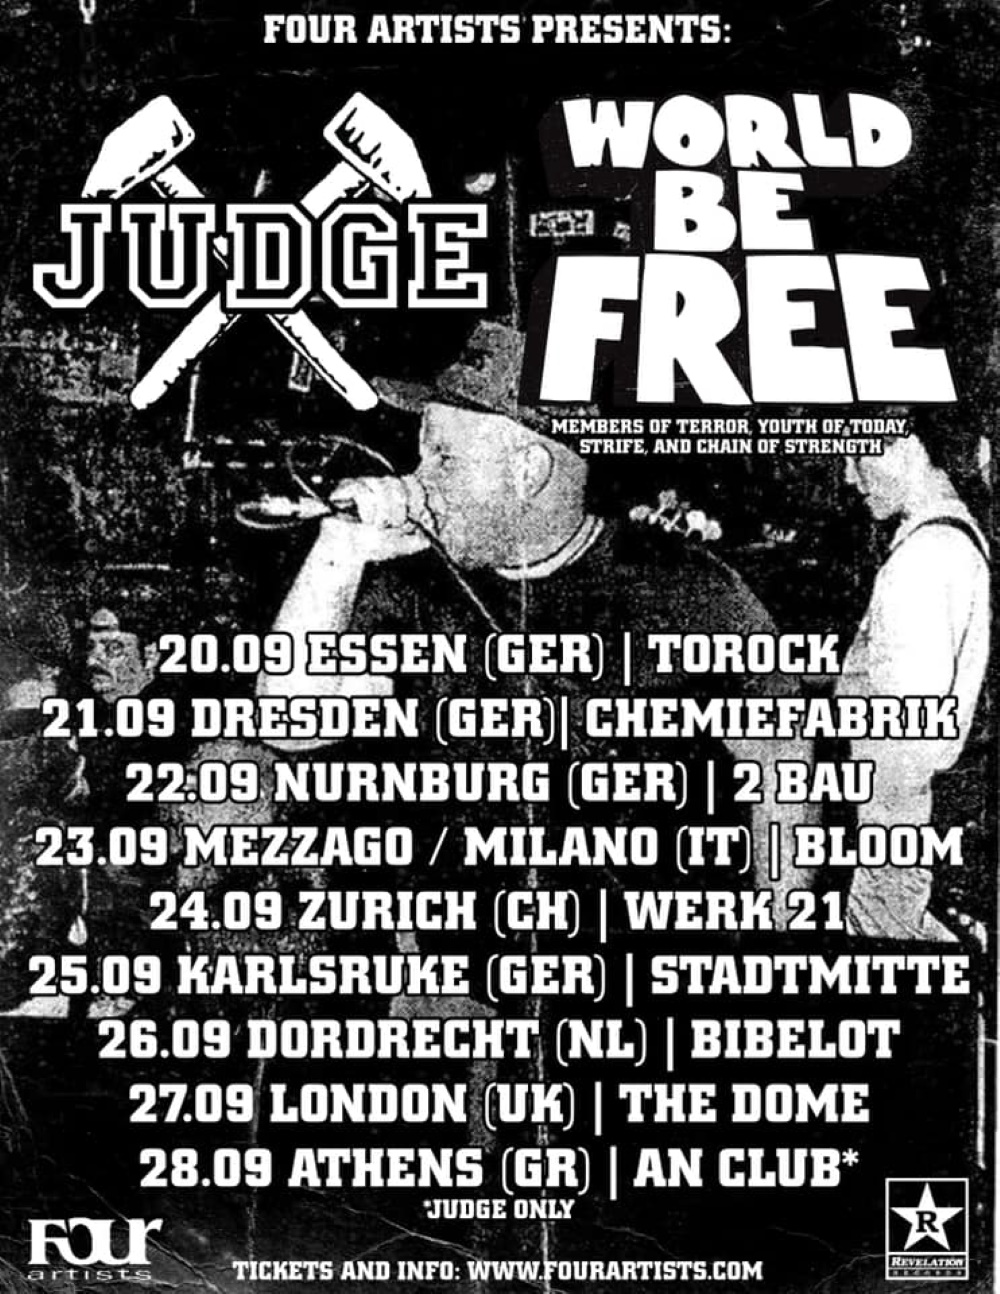 JUDGE and WORLD BE FREE European tour dates